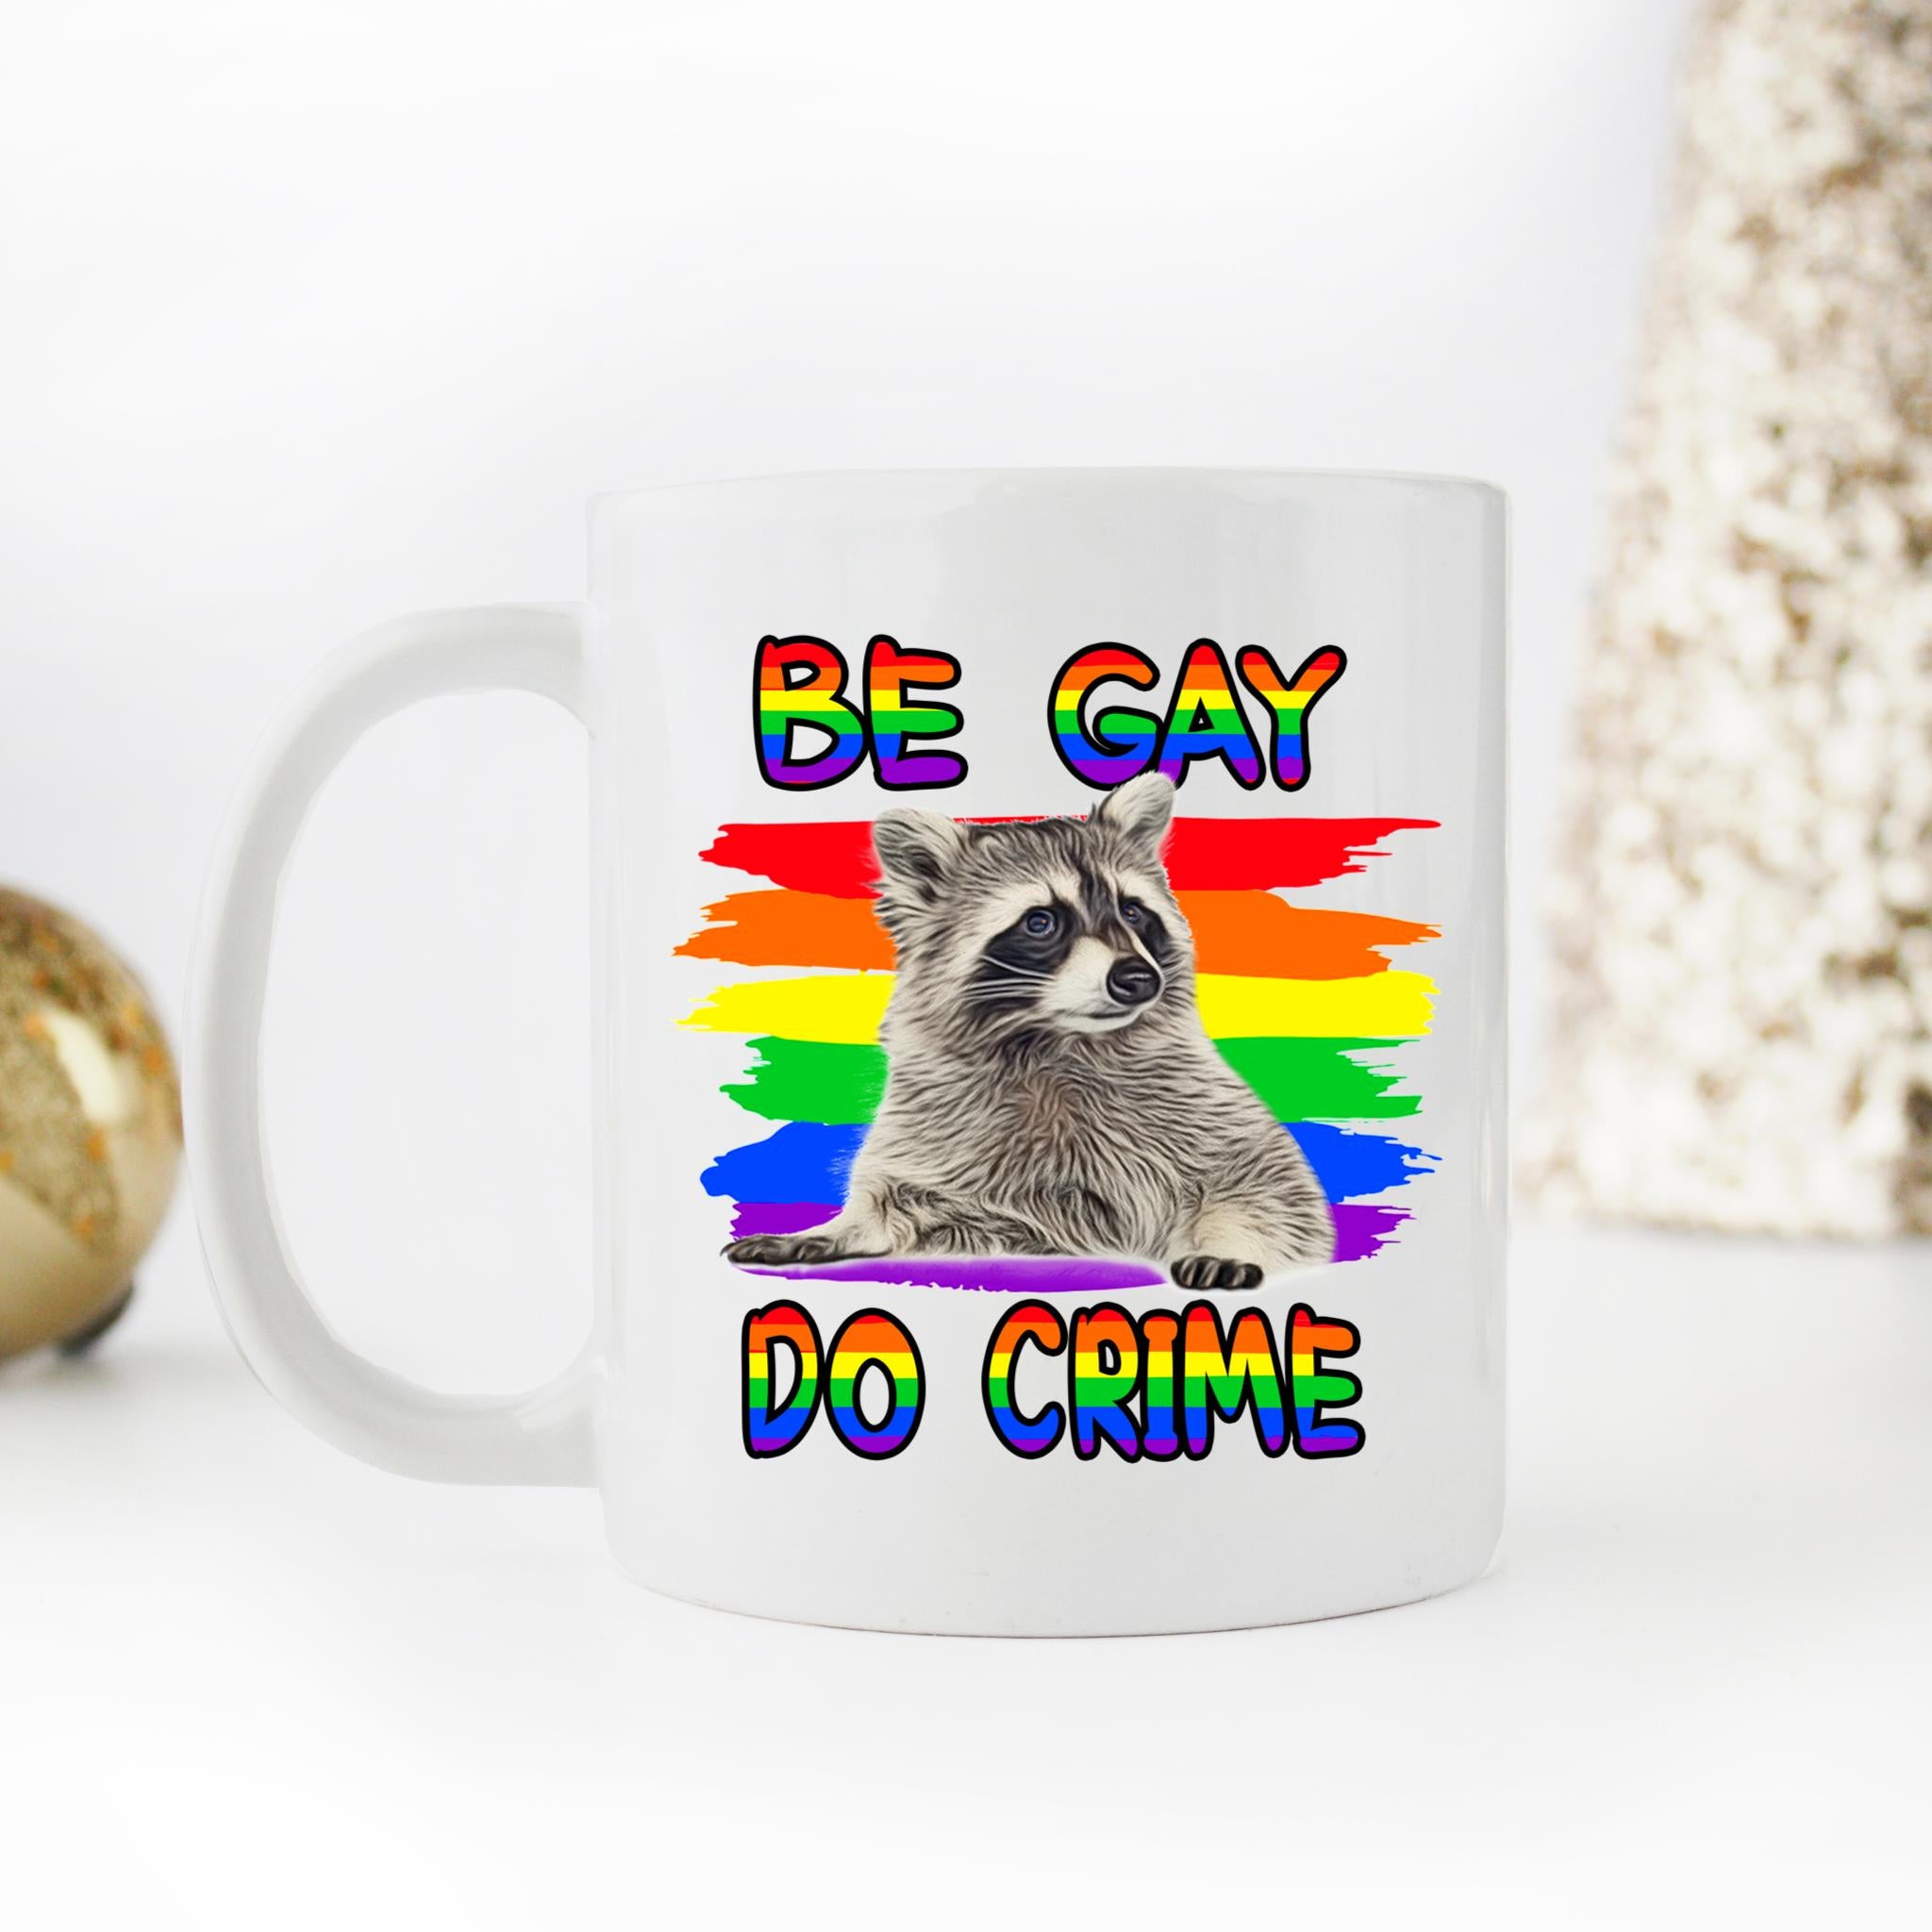 Skitongifts Coffee Mug Funny Ceramic Novelty NH06012022 - Be Gay Do Crime 5Ybiujj